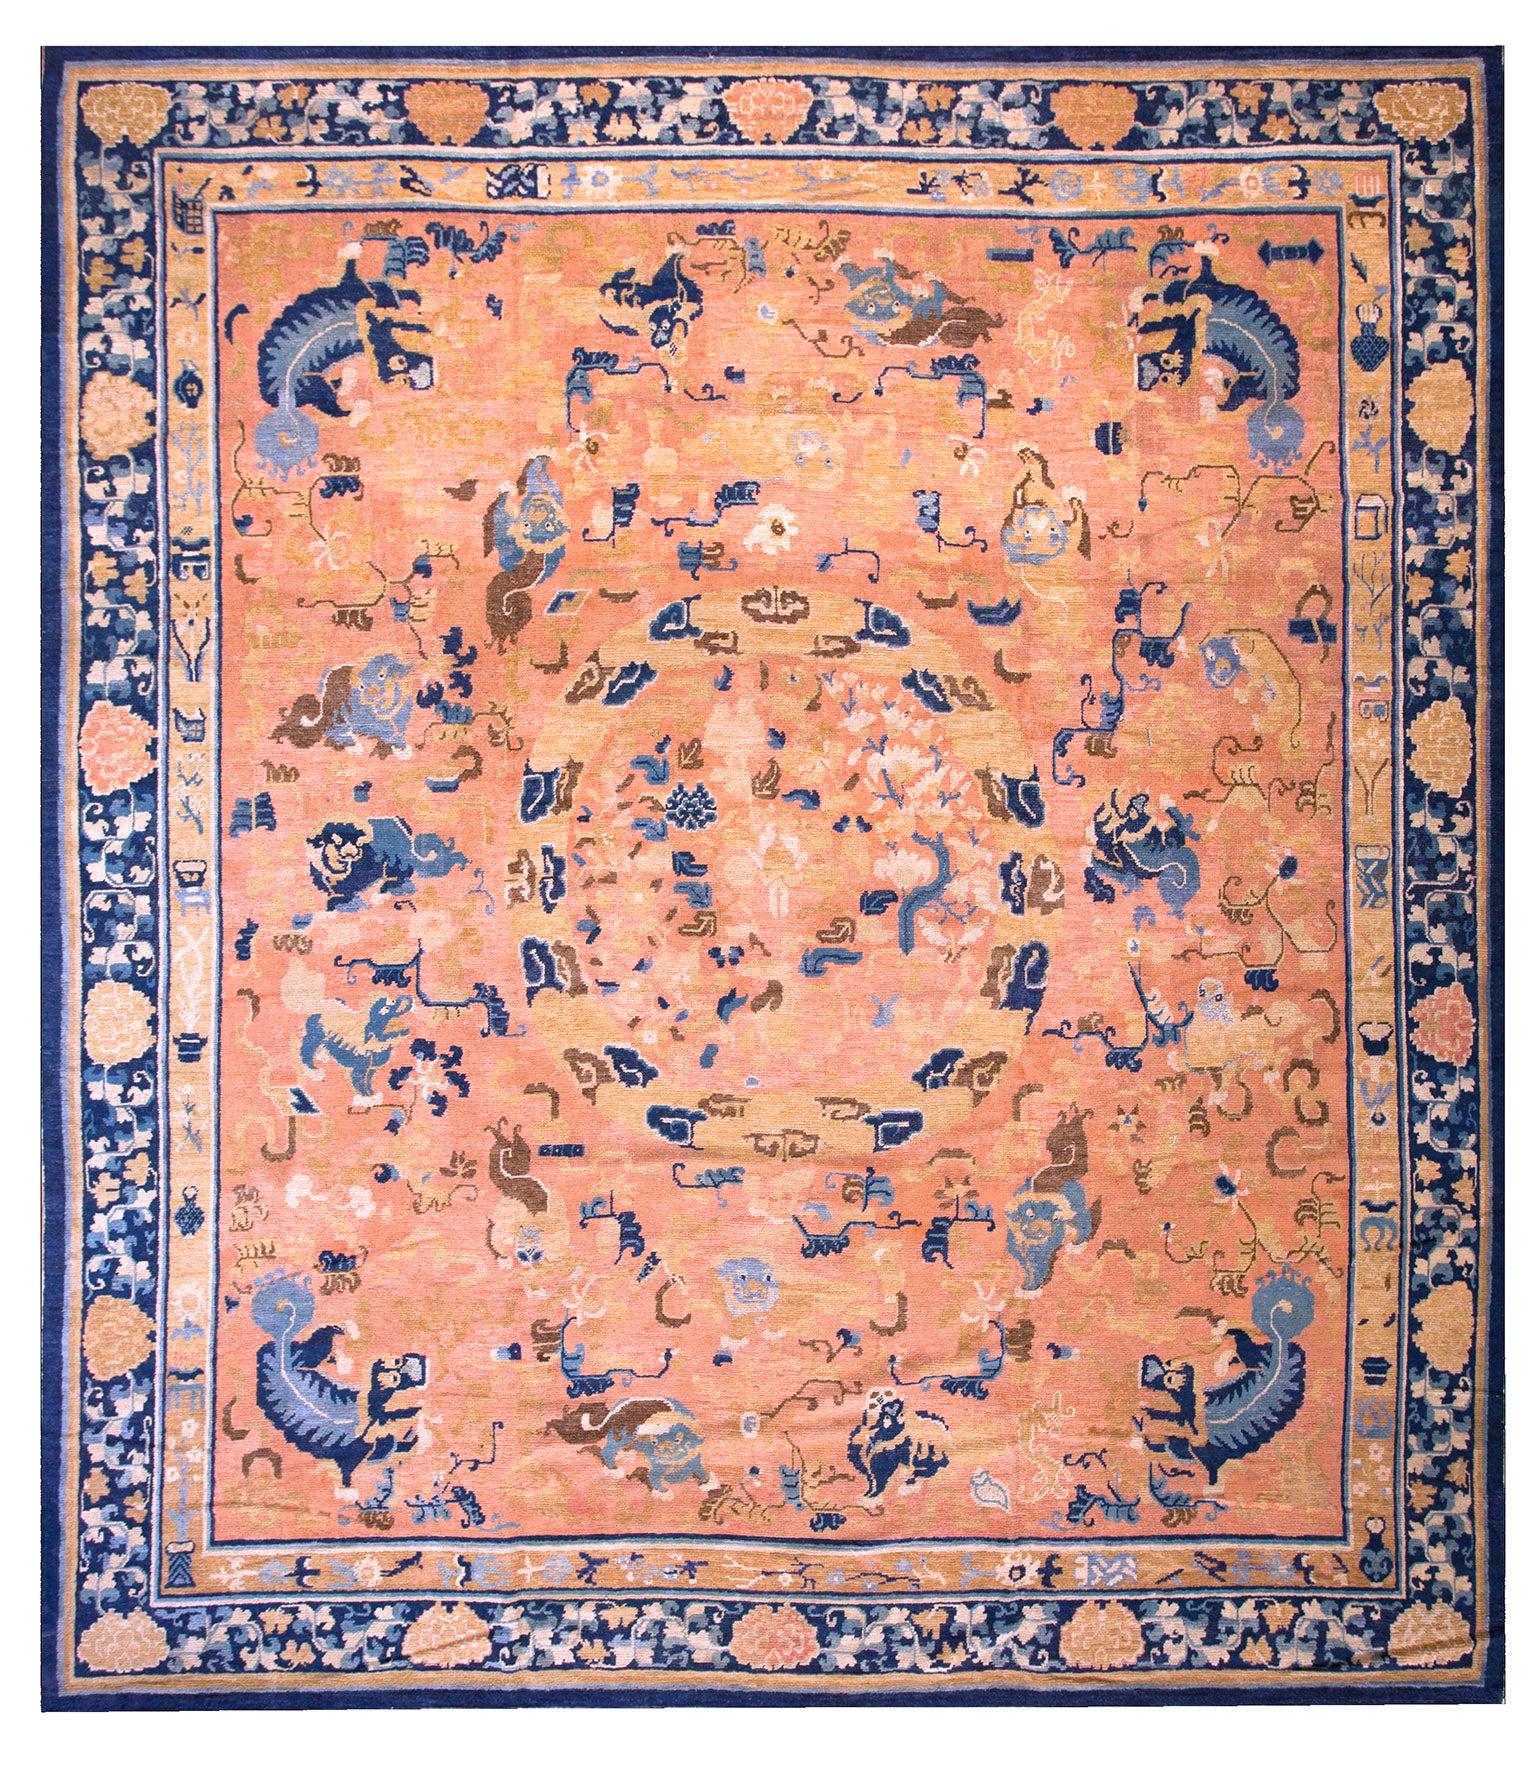 18th Century W. Chinese Ningxia Carpet ( 11'3" x 12'4" - 343 x 376 )